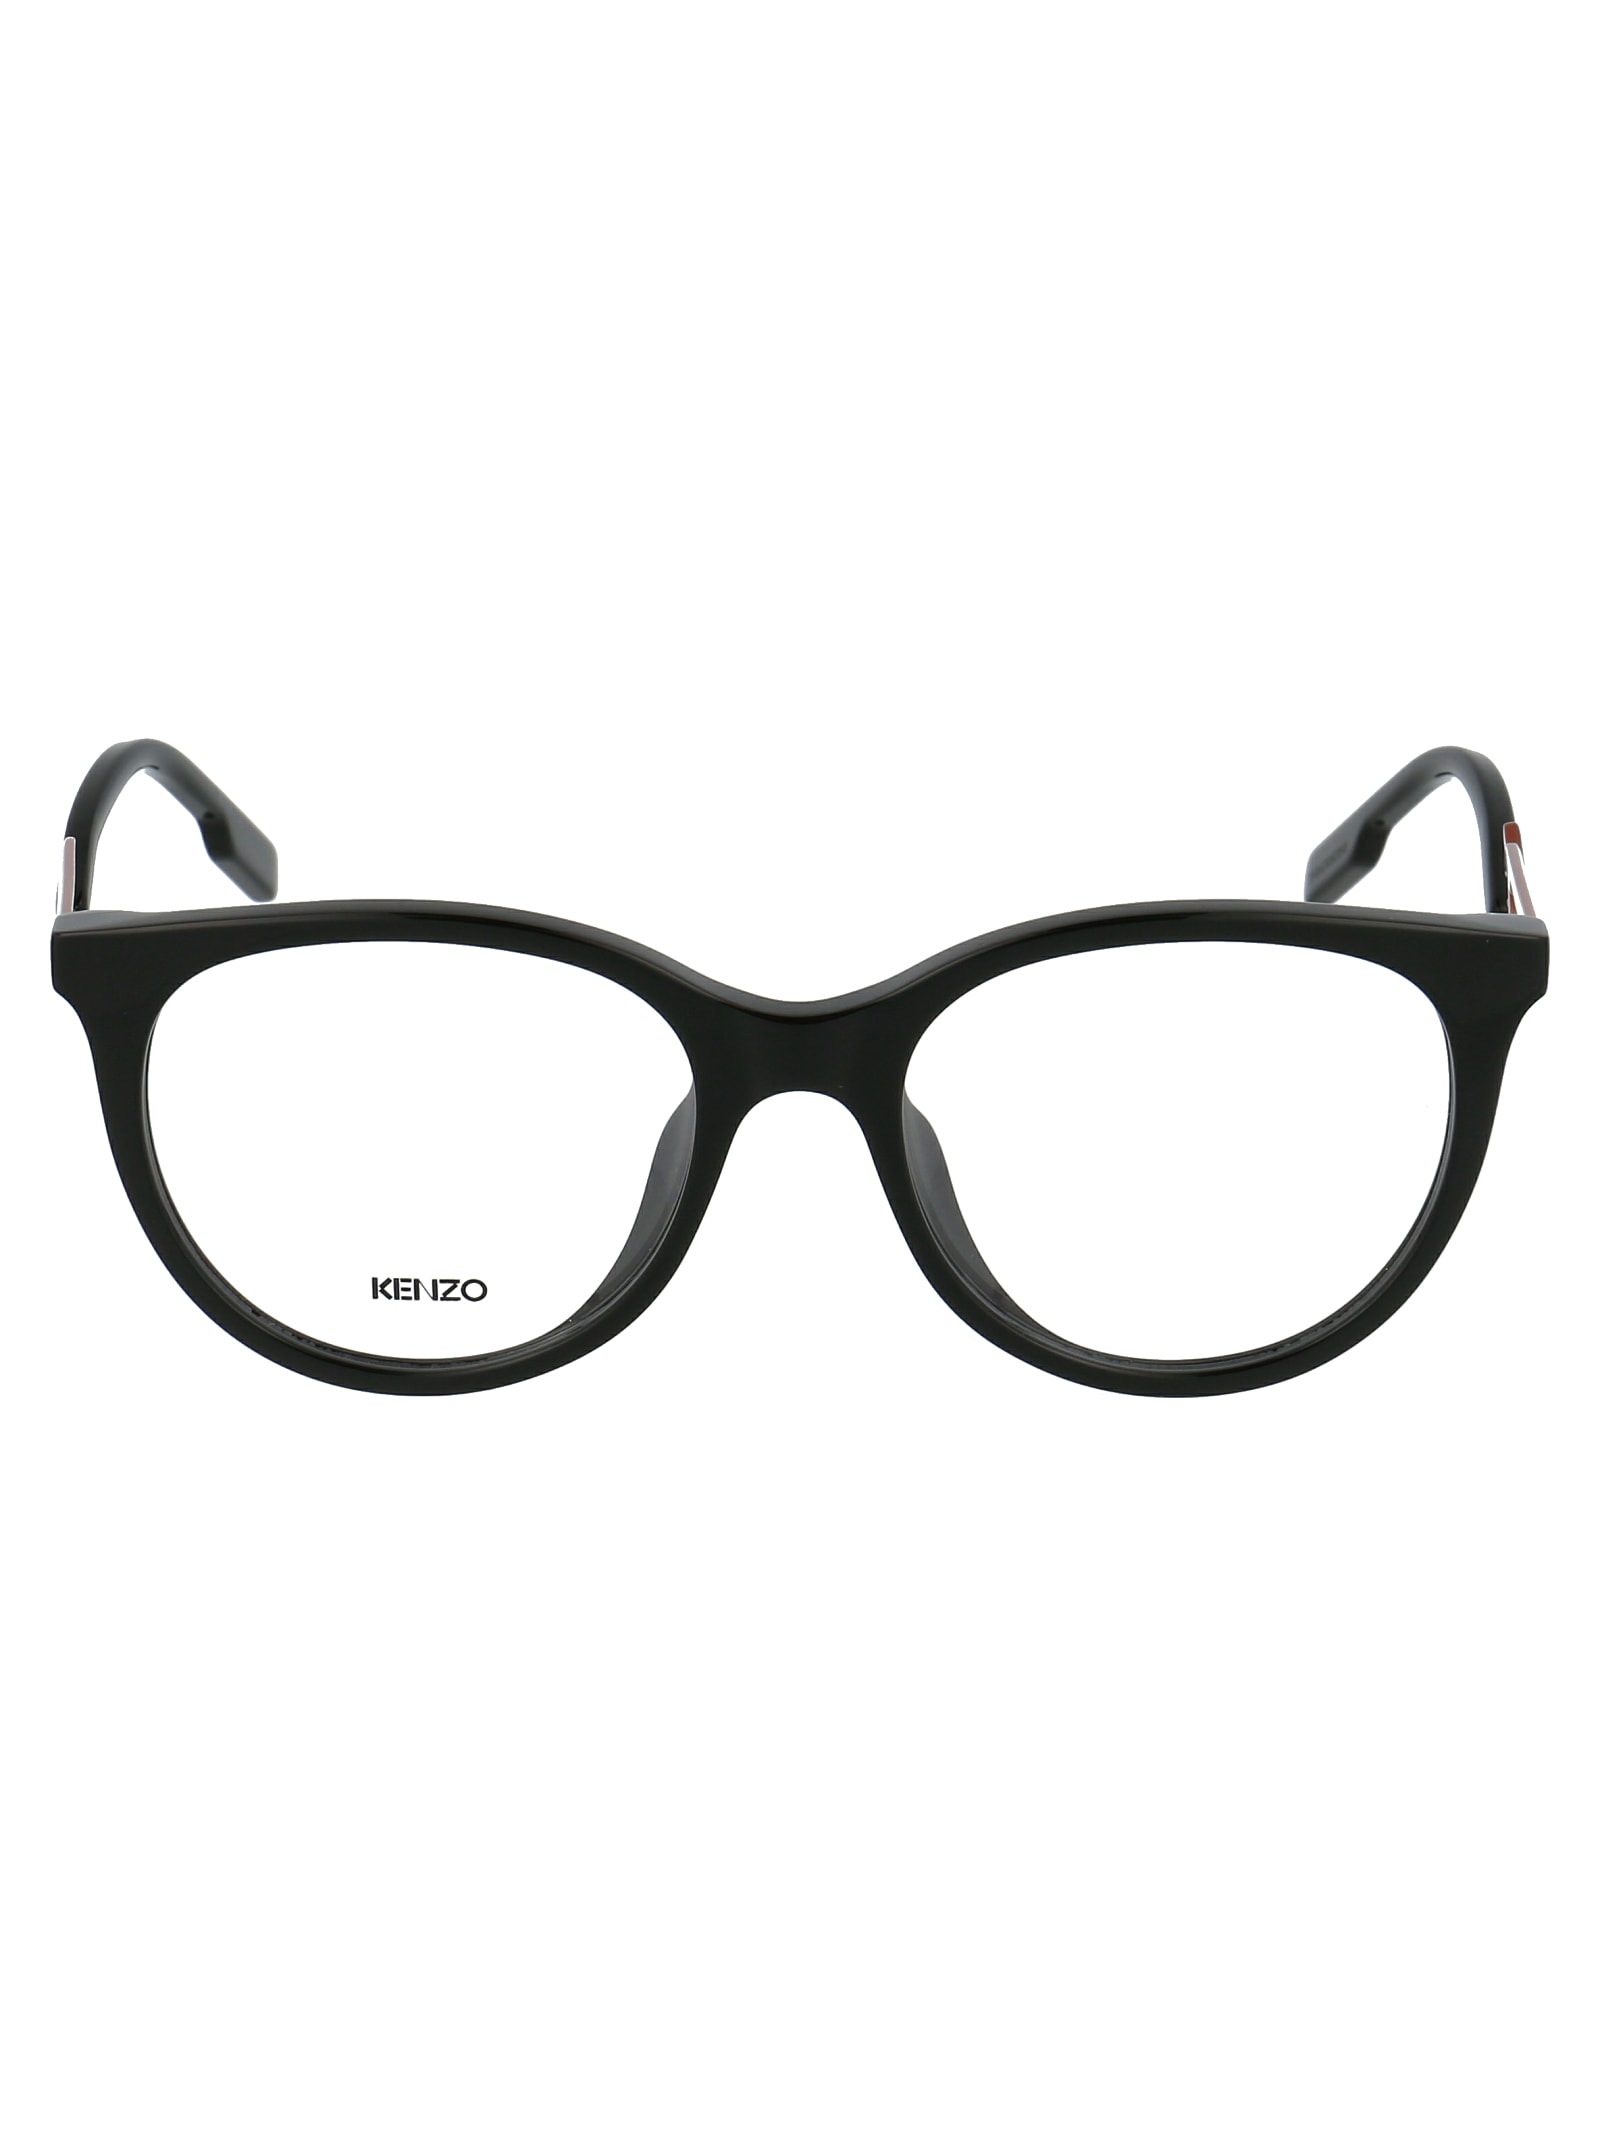 Kenzo Eyewear In Shiny Black